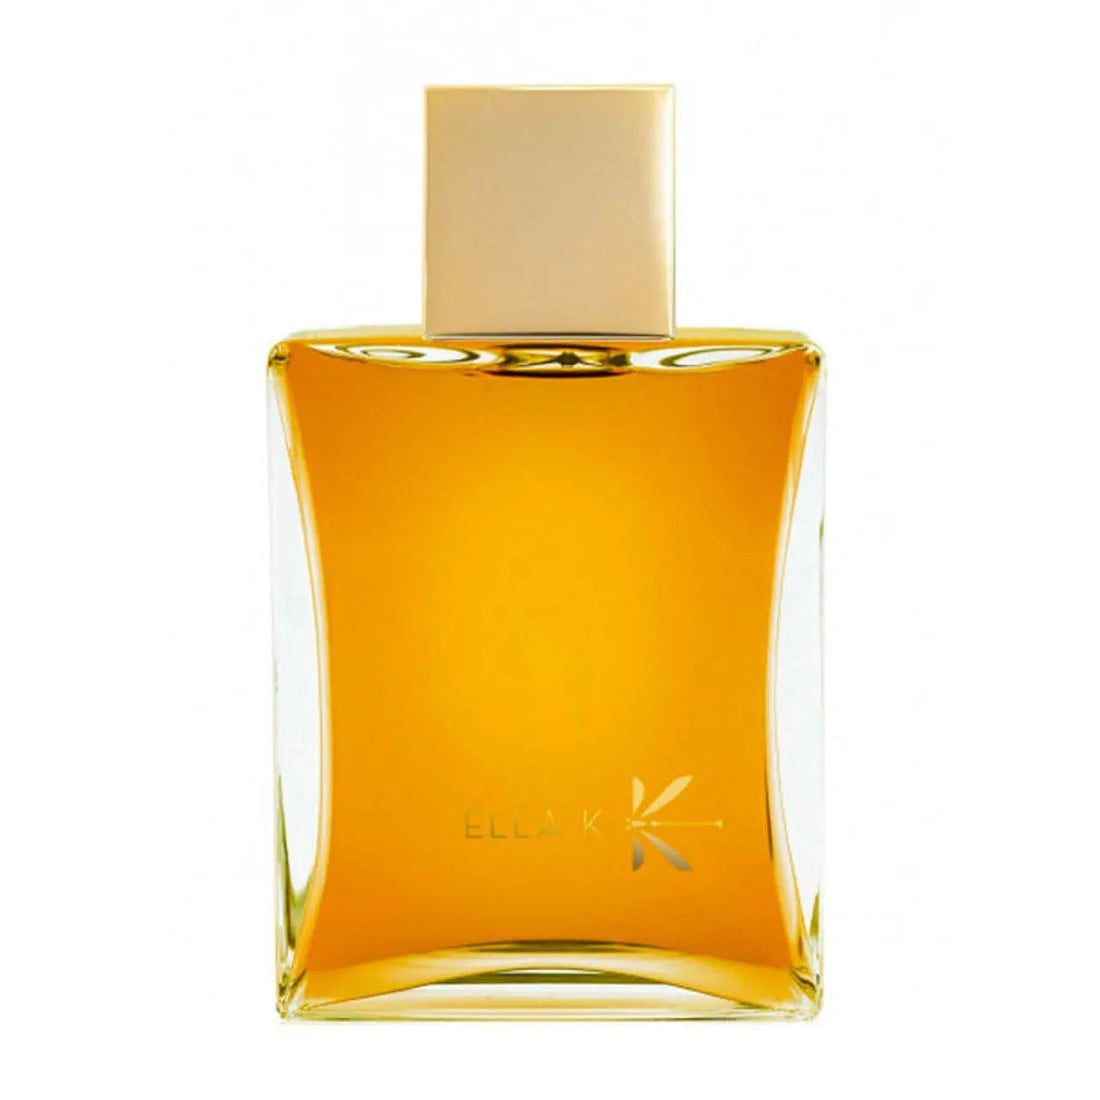 Ella k parfums KHAMSIN eau de parfum - 100 ml